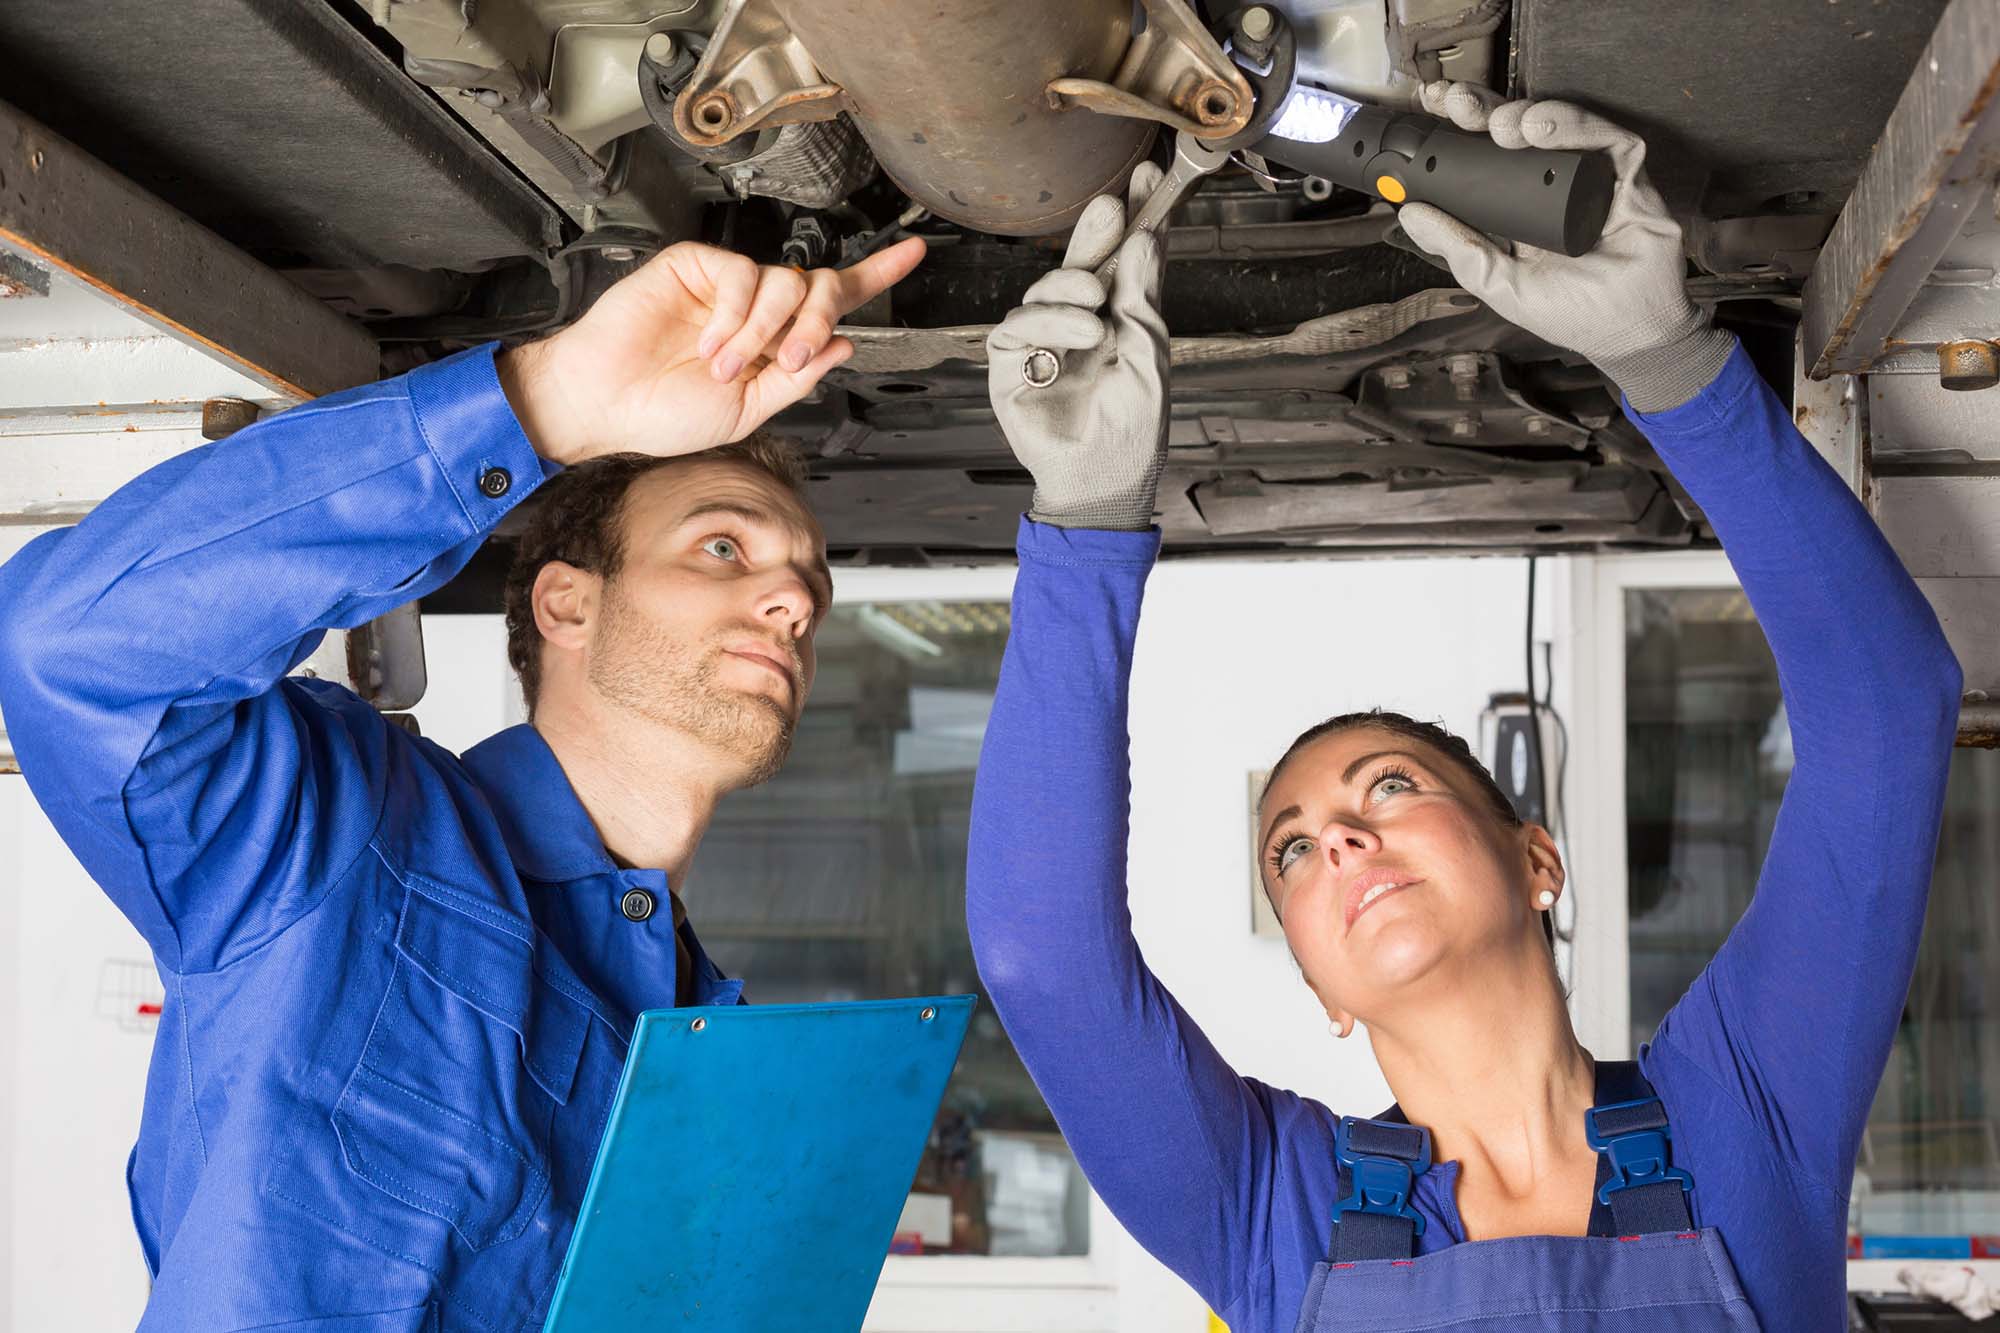 Professional car mechanic working in auto repair service.